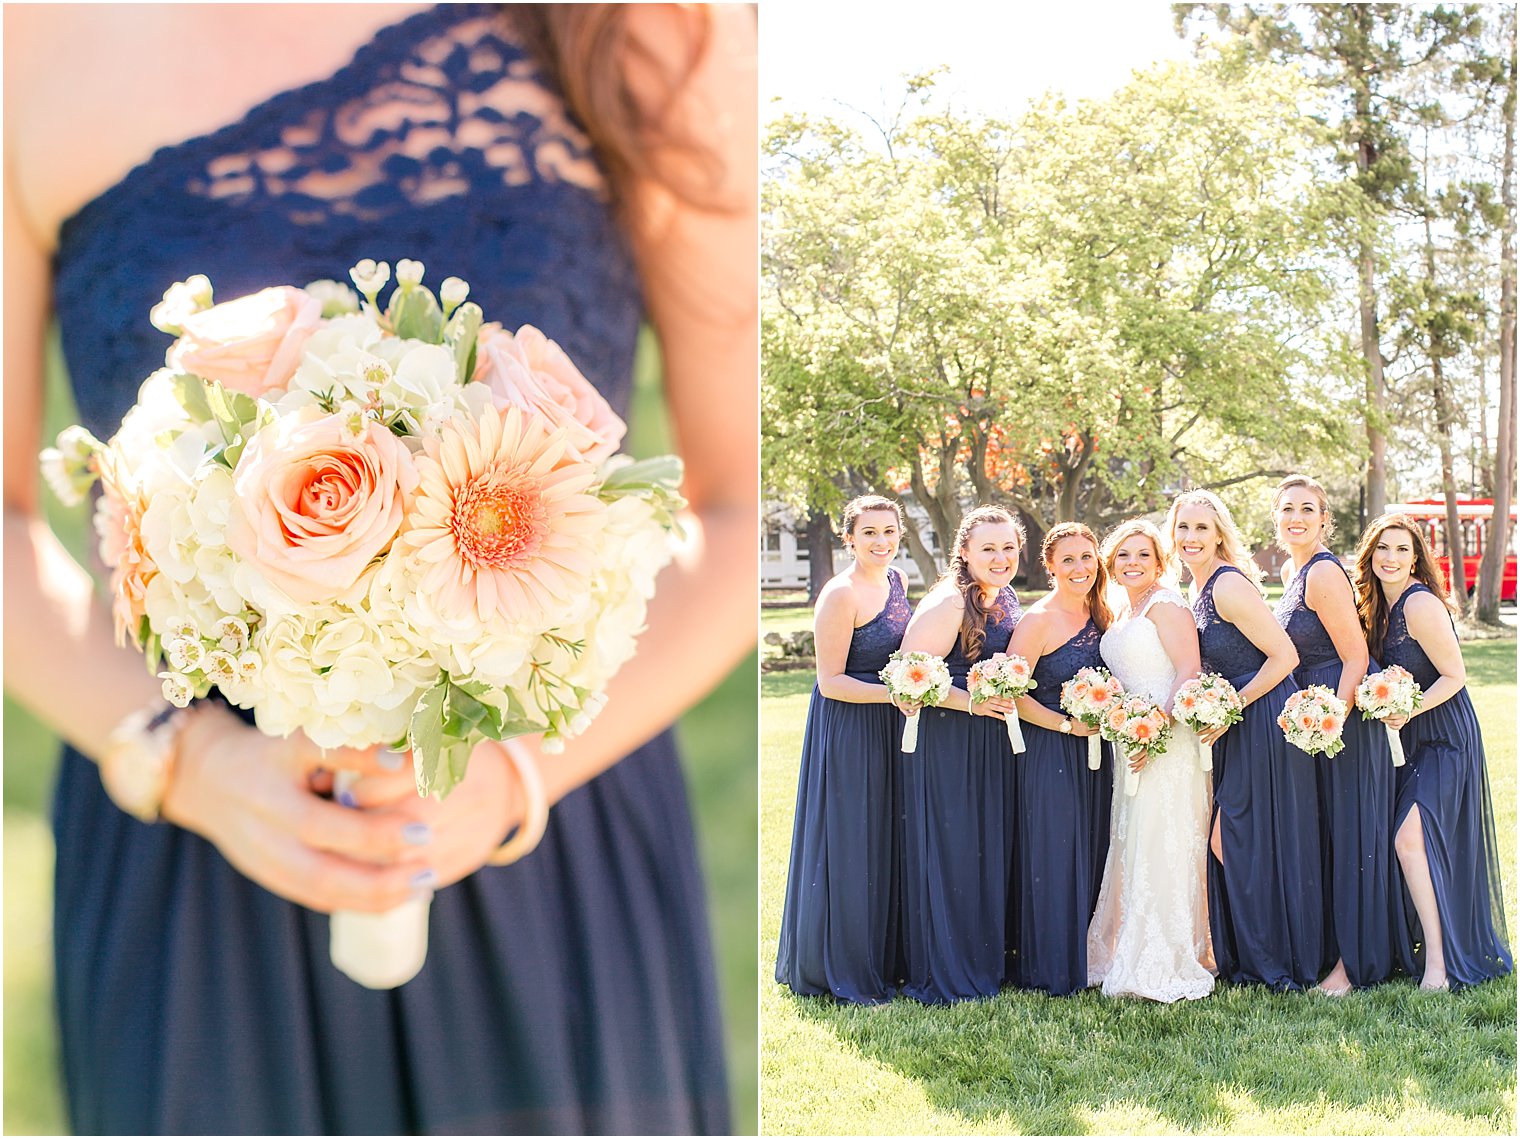 Bridesmaids in navy blue | Photo by Idalia Photography